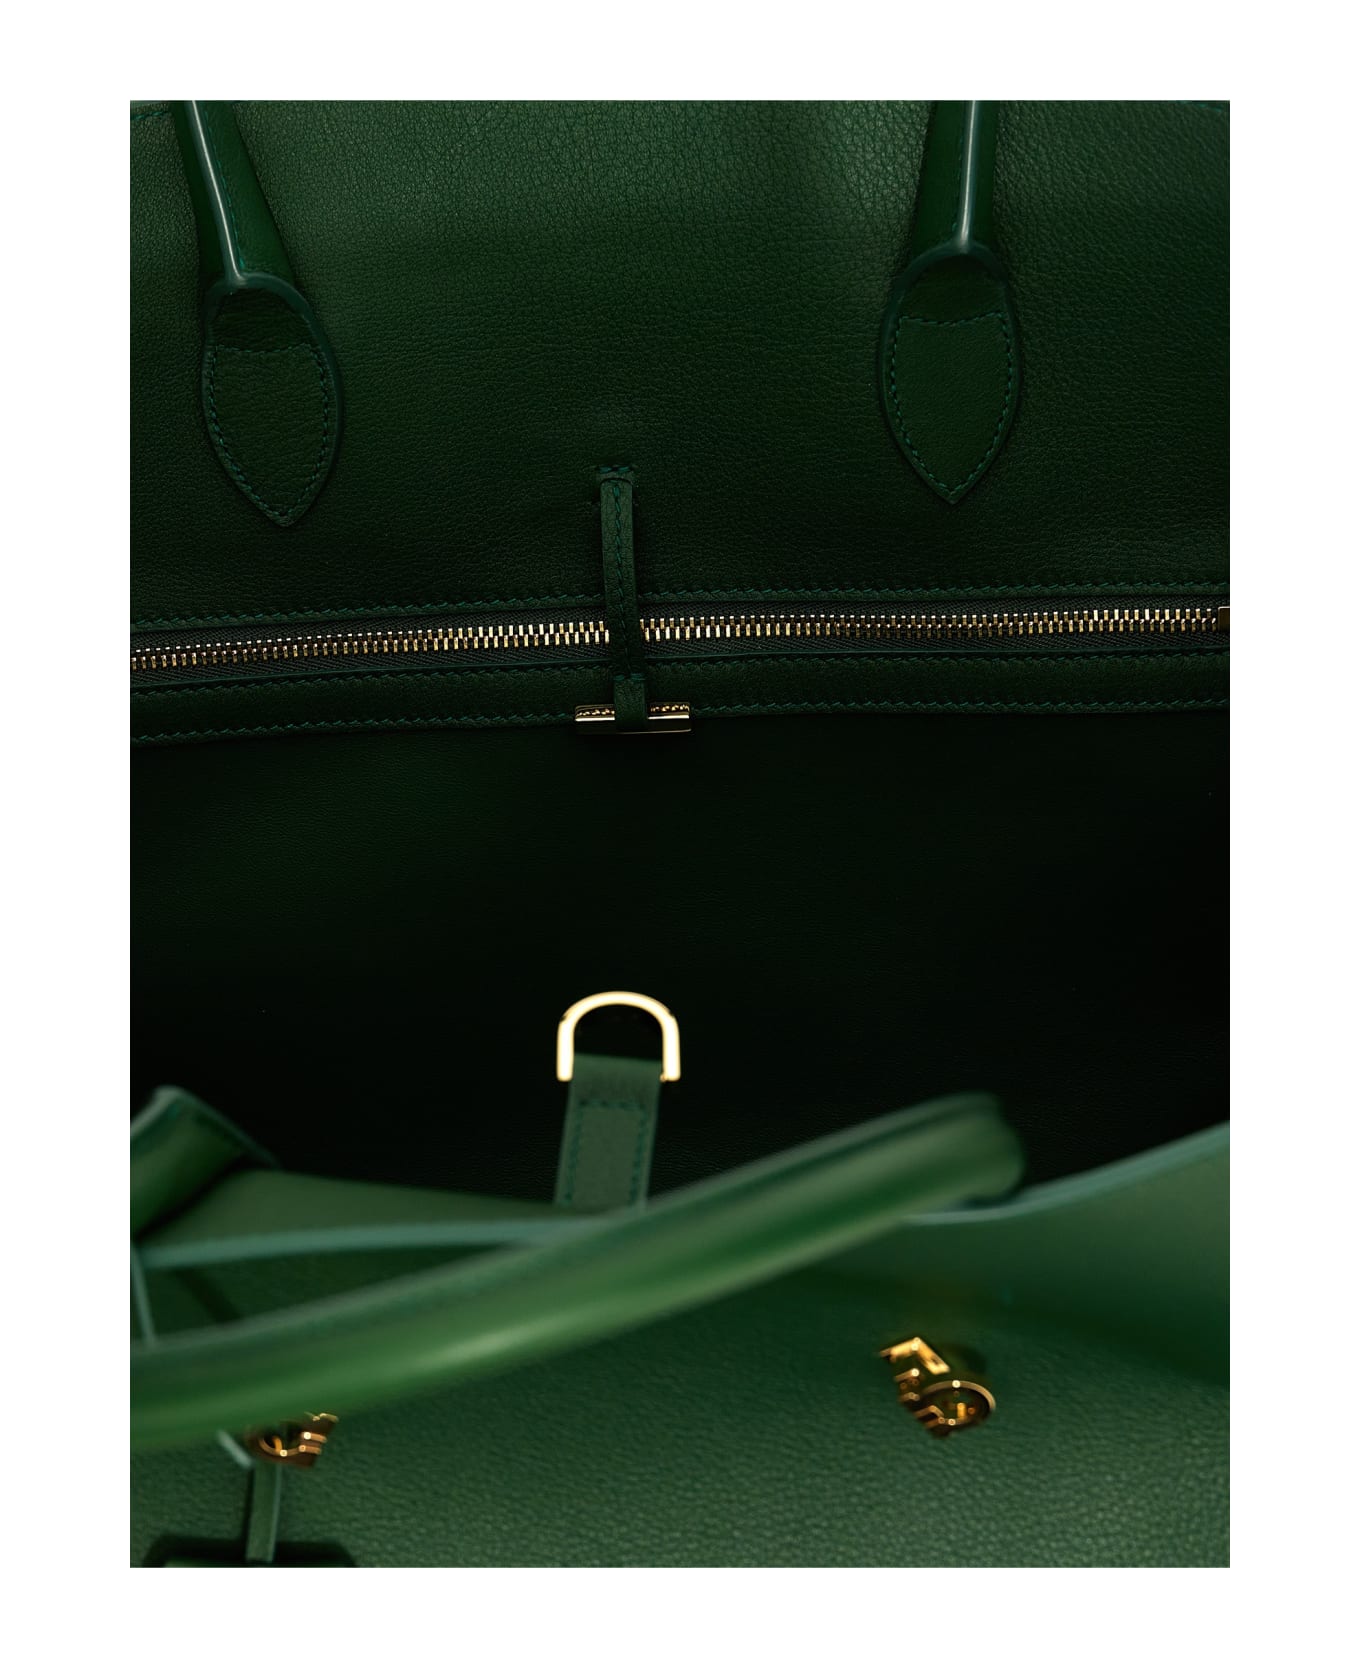 Ferragamo 'hug Medium' Handbag - Green